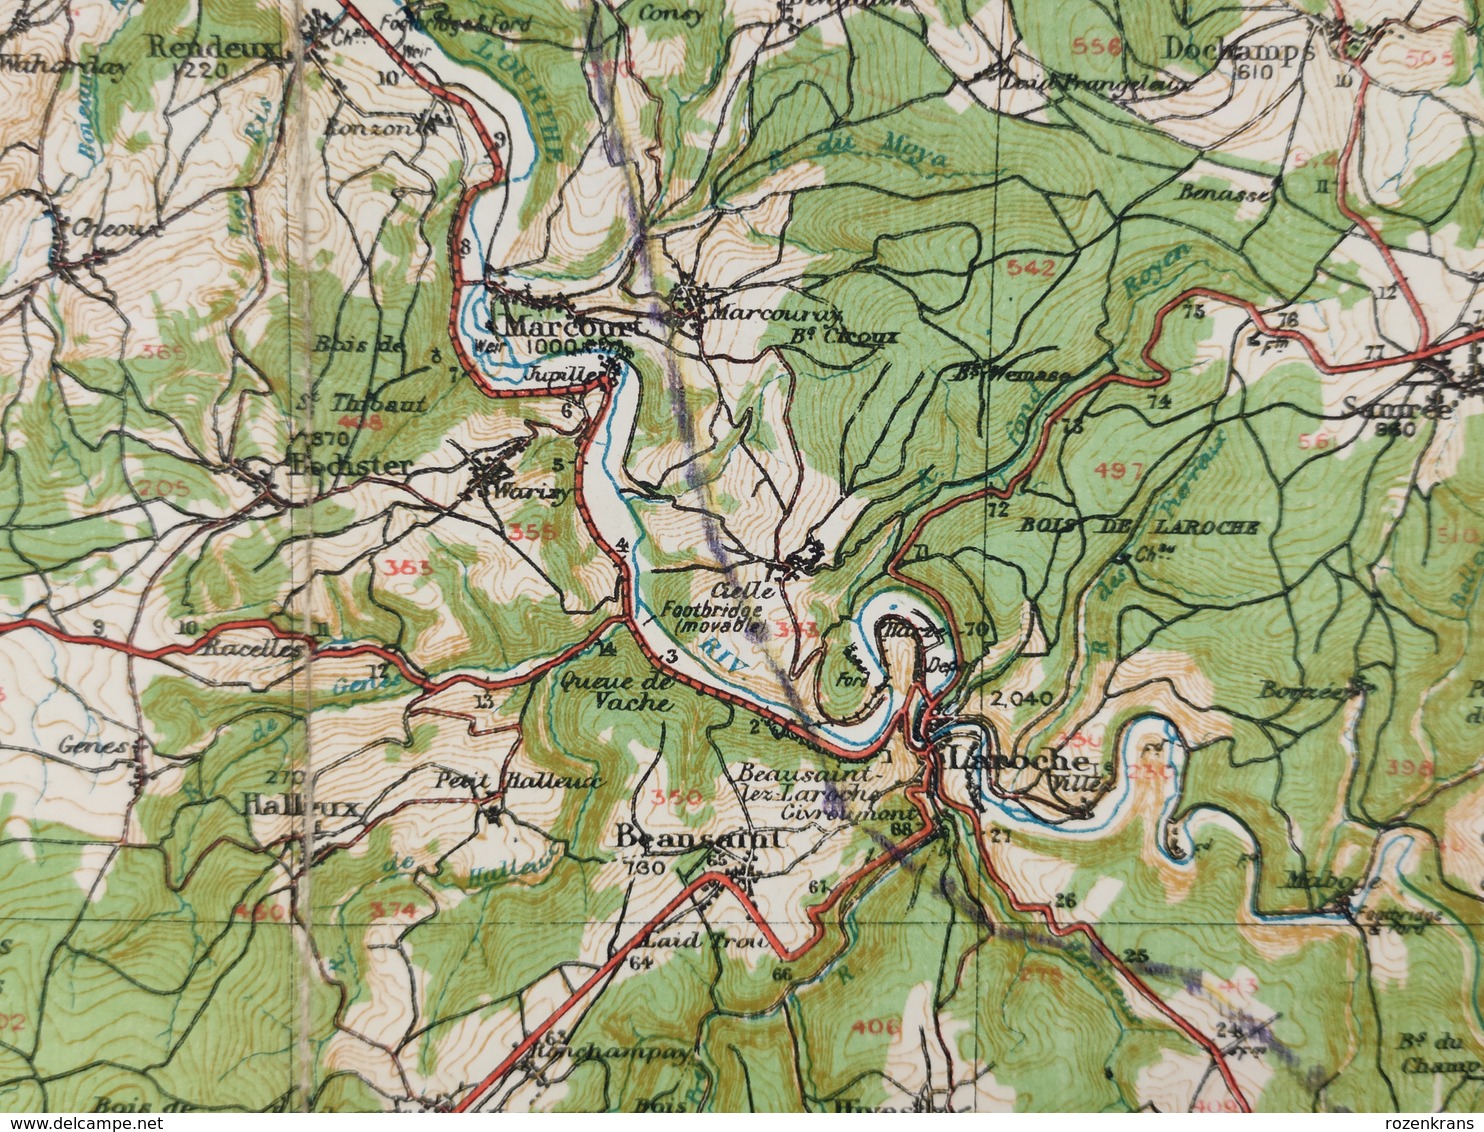 Carte Topographique Militaire UK War Office 1919 World War 1 WW1 Marche Durbuy Houffalize Rochefort Laroche Stavelot - Topographische Karten